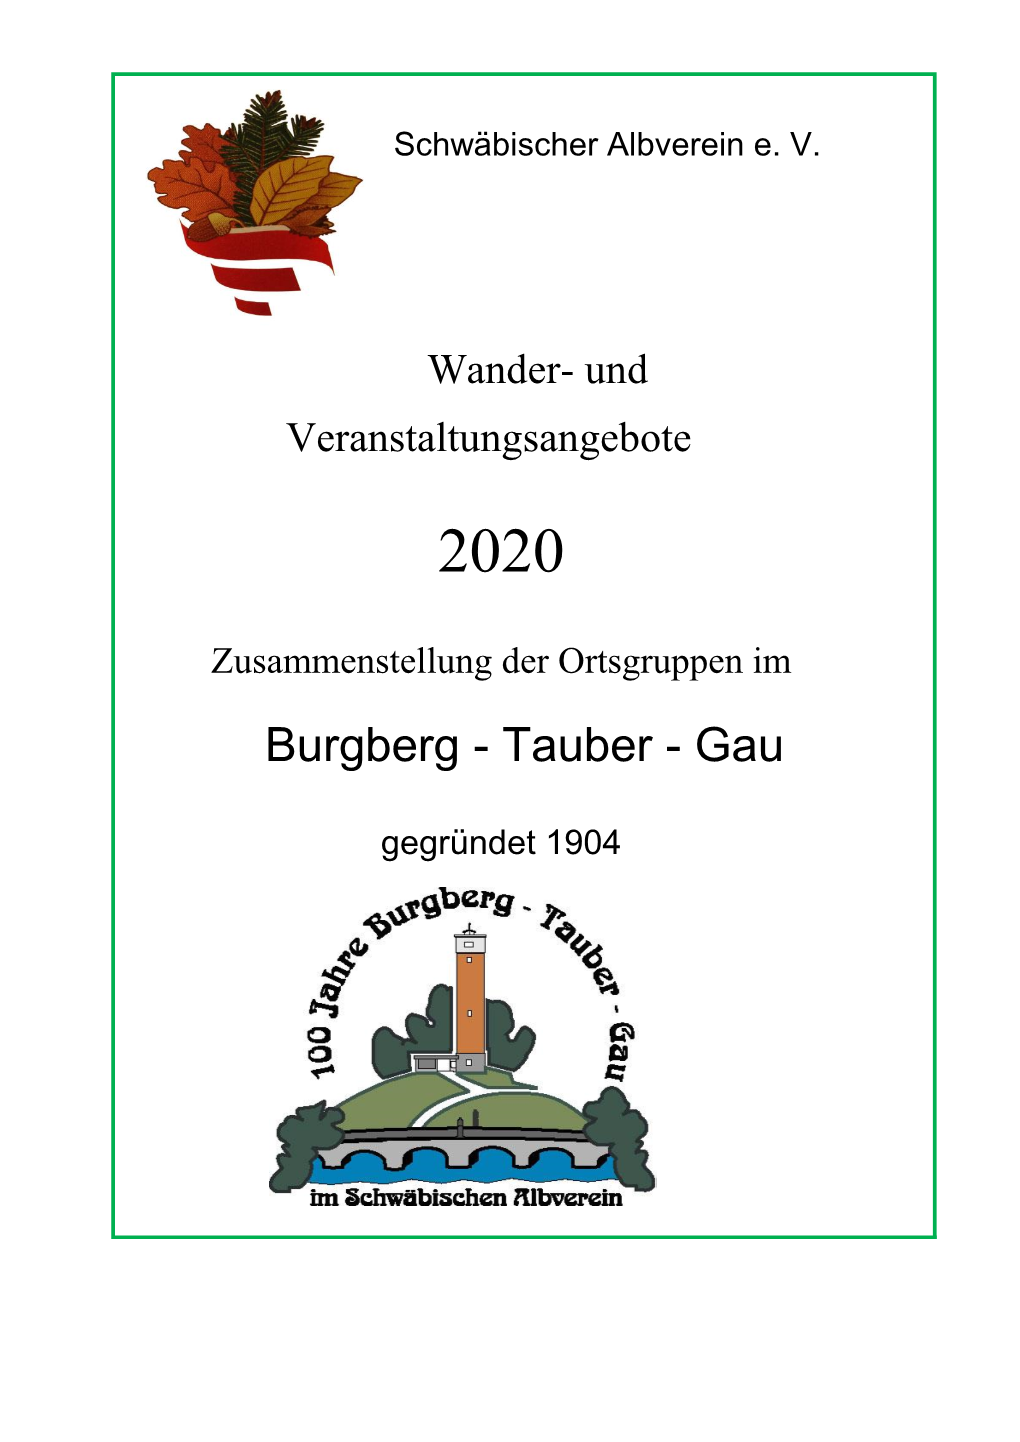 Burgberg - Tauber - Gau